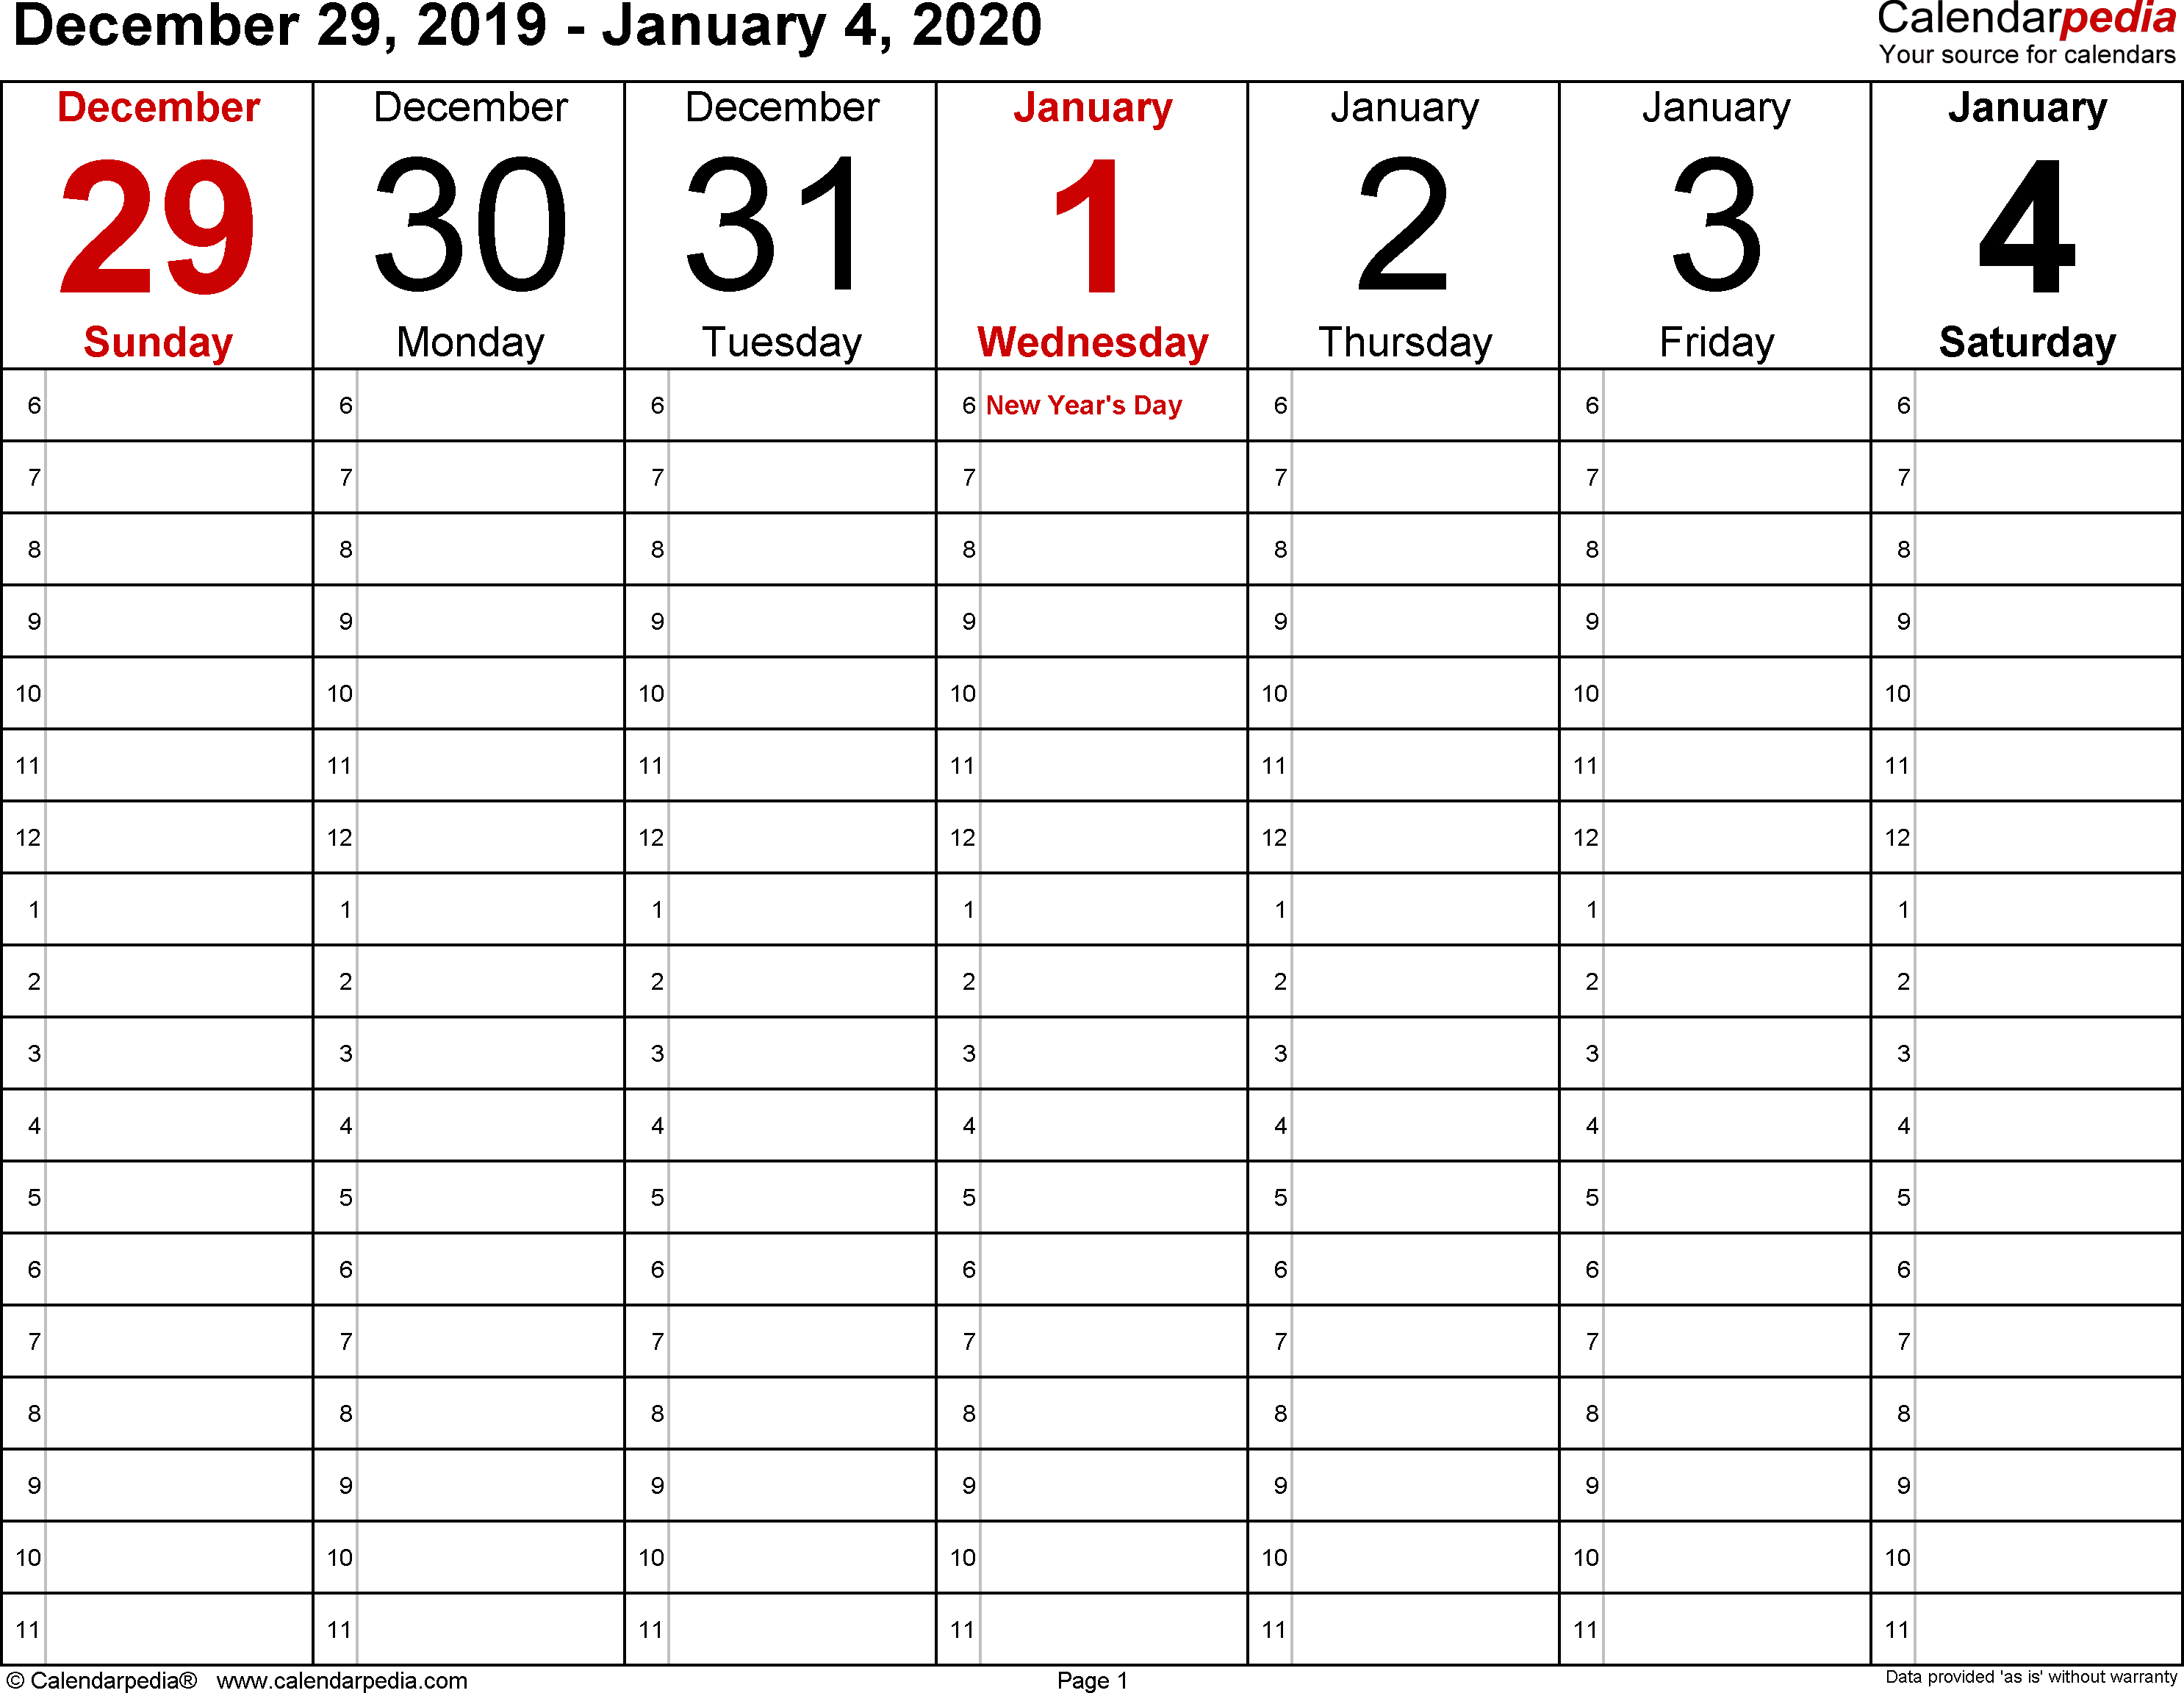 Calendarpedia  Your Source For Calendars with regard to Calendarpedia January 2020